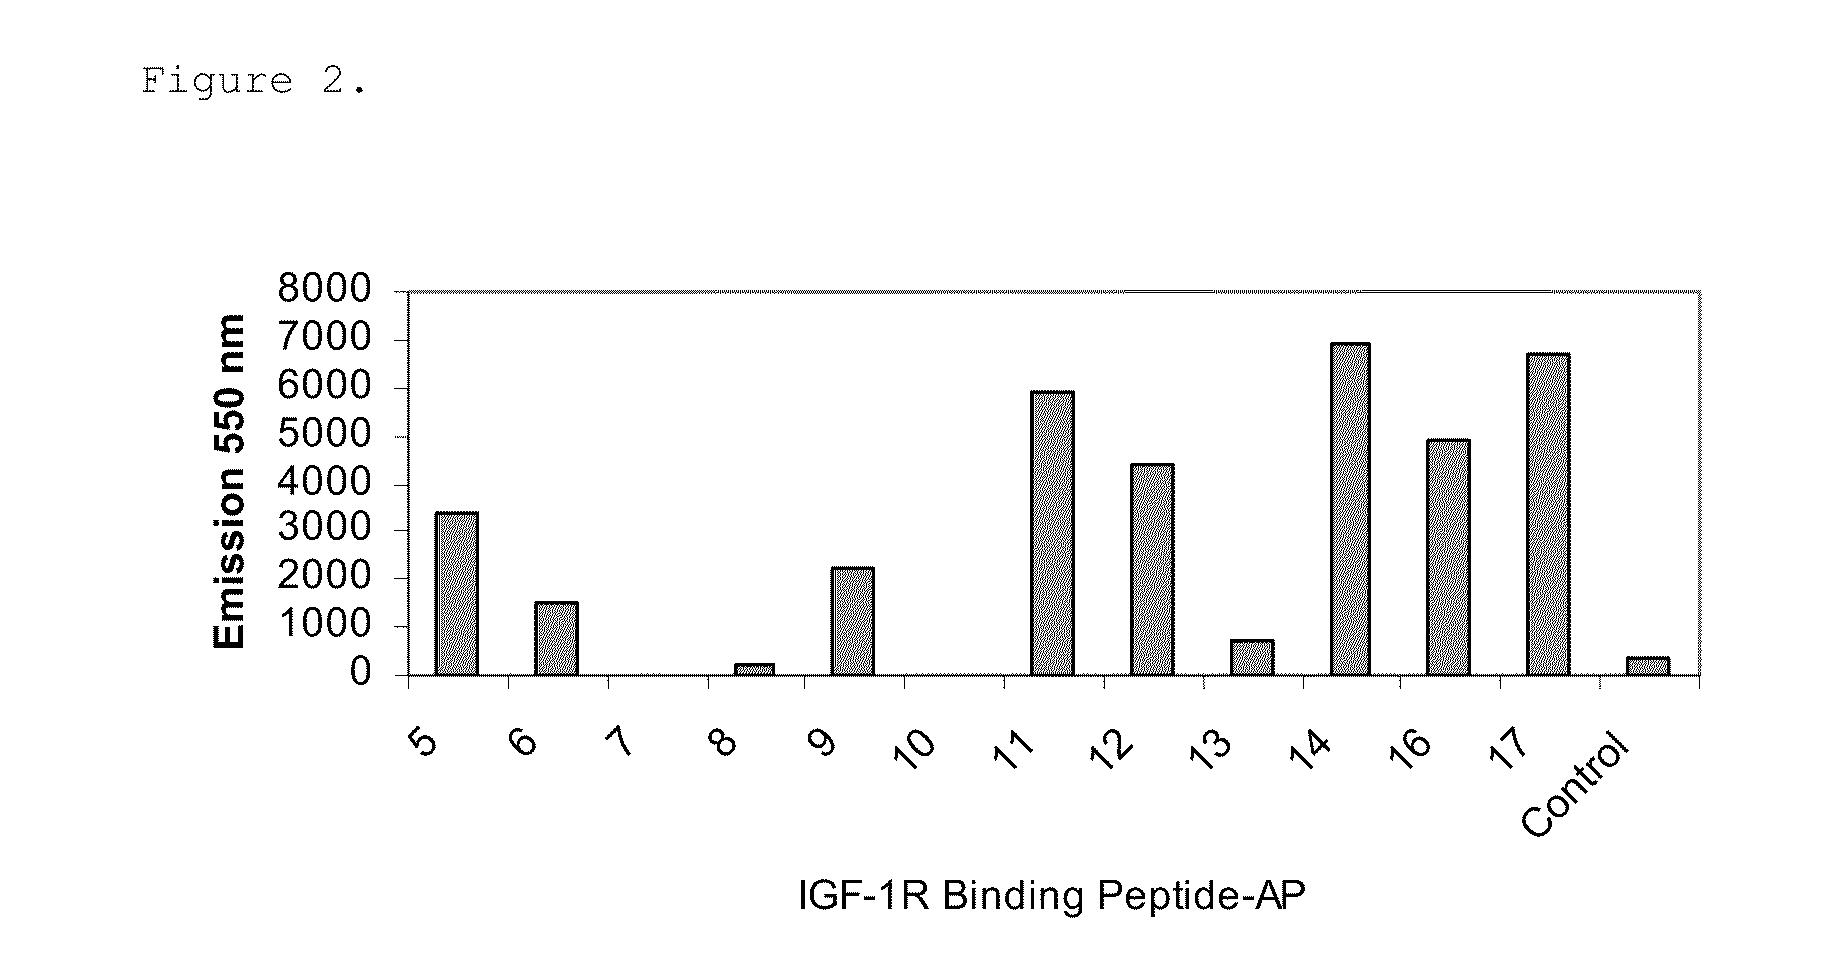 Insulin-like growth factor 1 receptor binding peptides